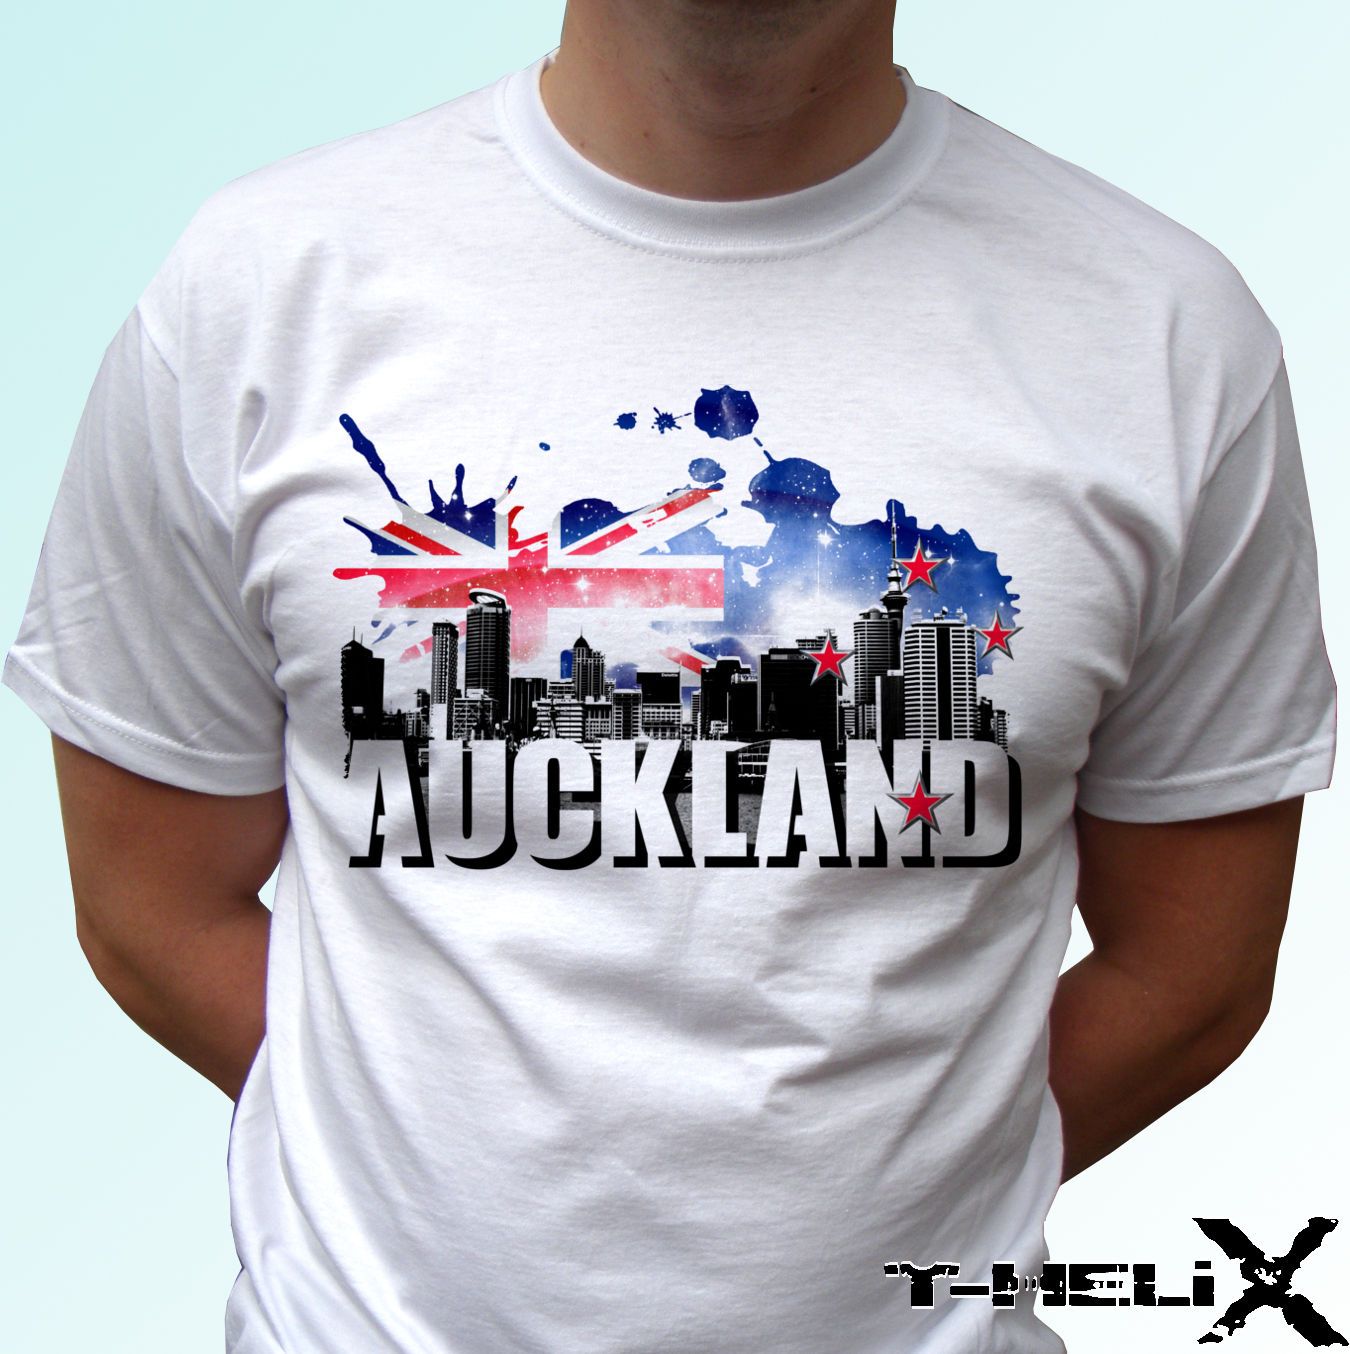 tee shirt printing auckland